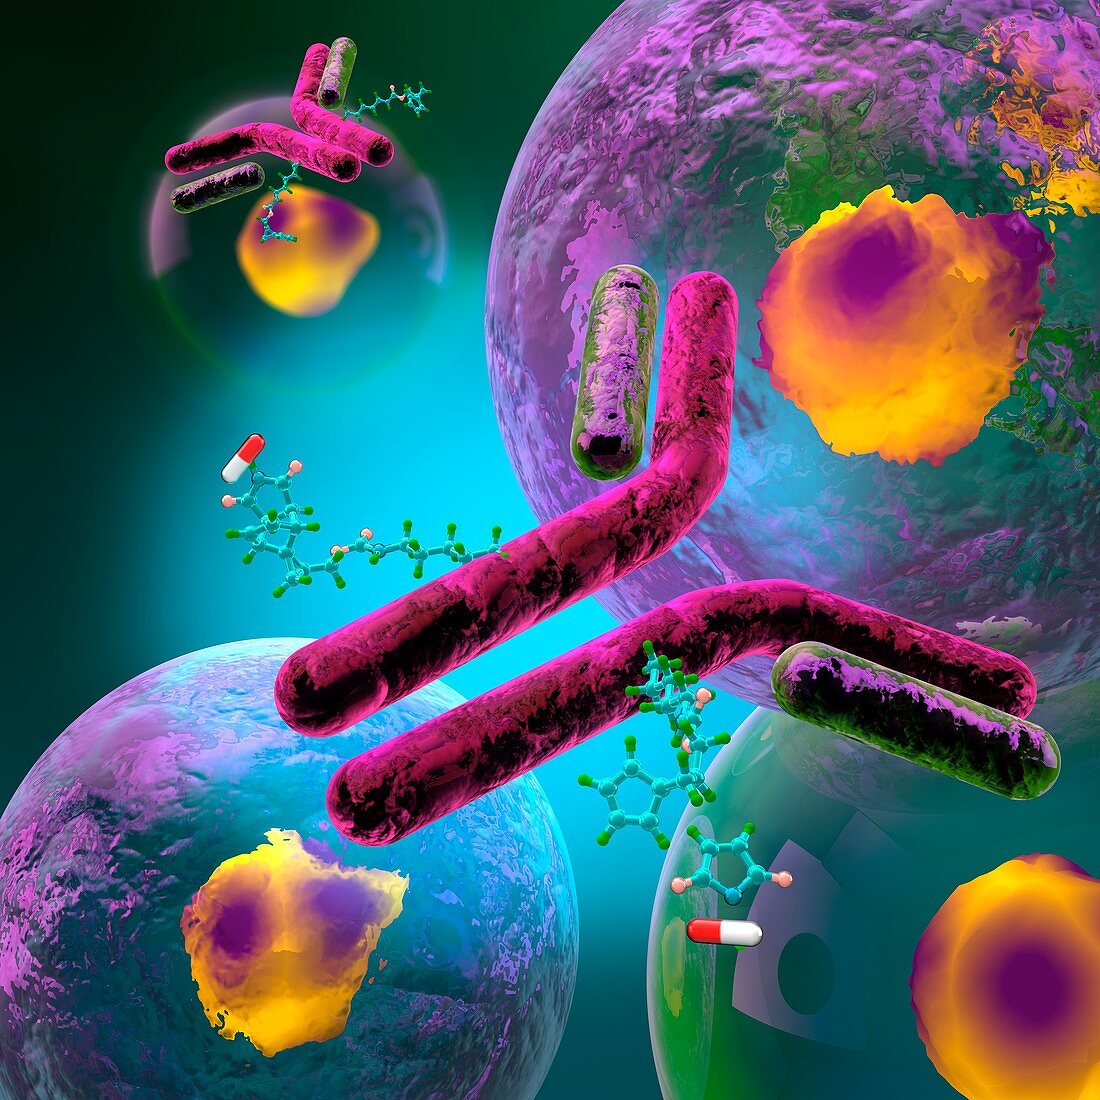 Antibody-drug conjugates, illustration